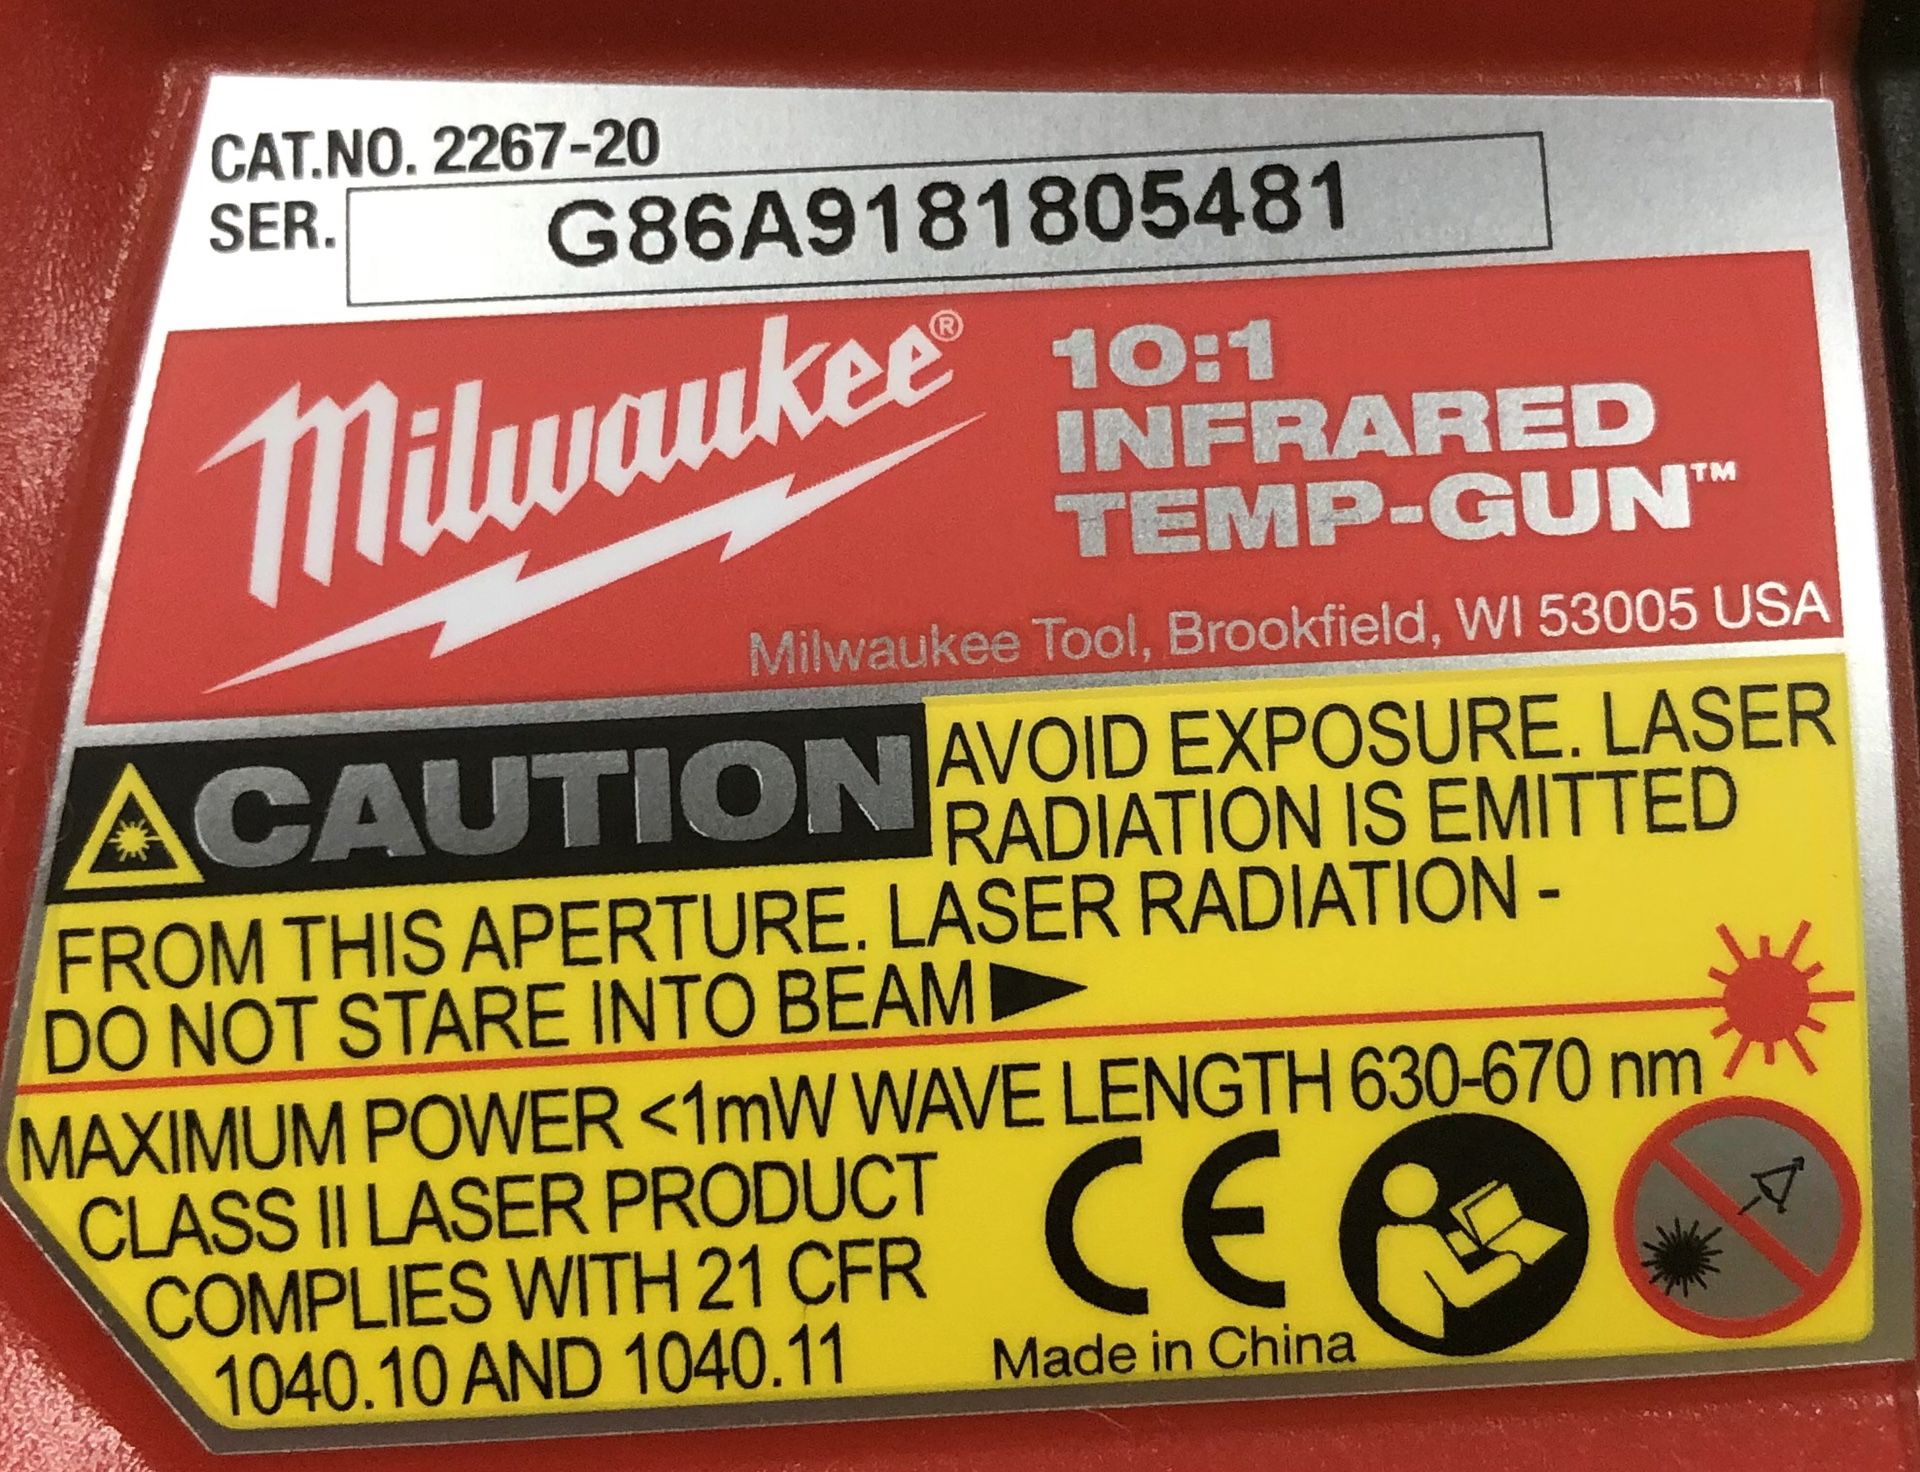 Milwaukee 10:1 Infrared Temp Gun 2267-20